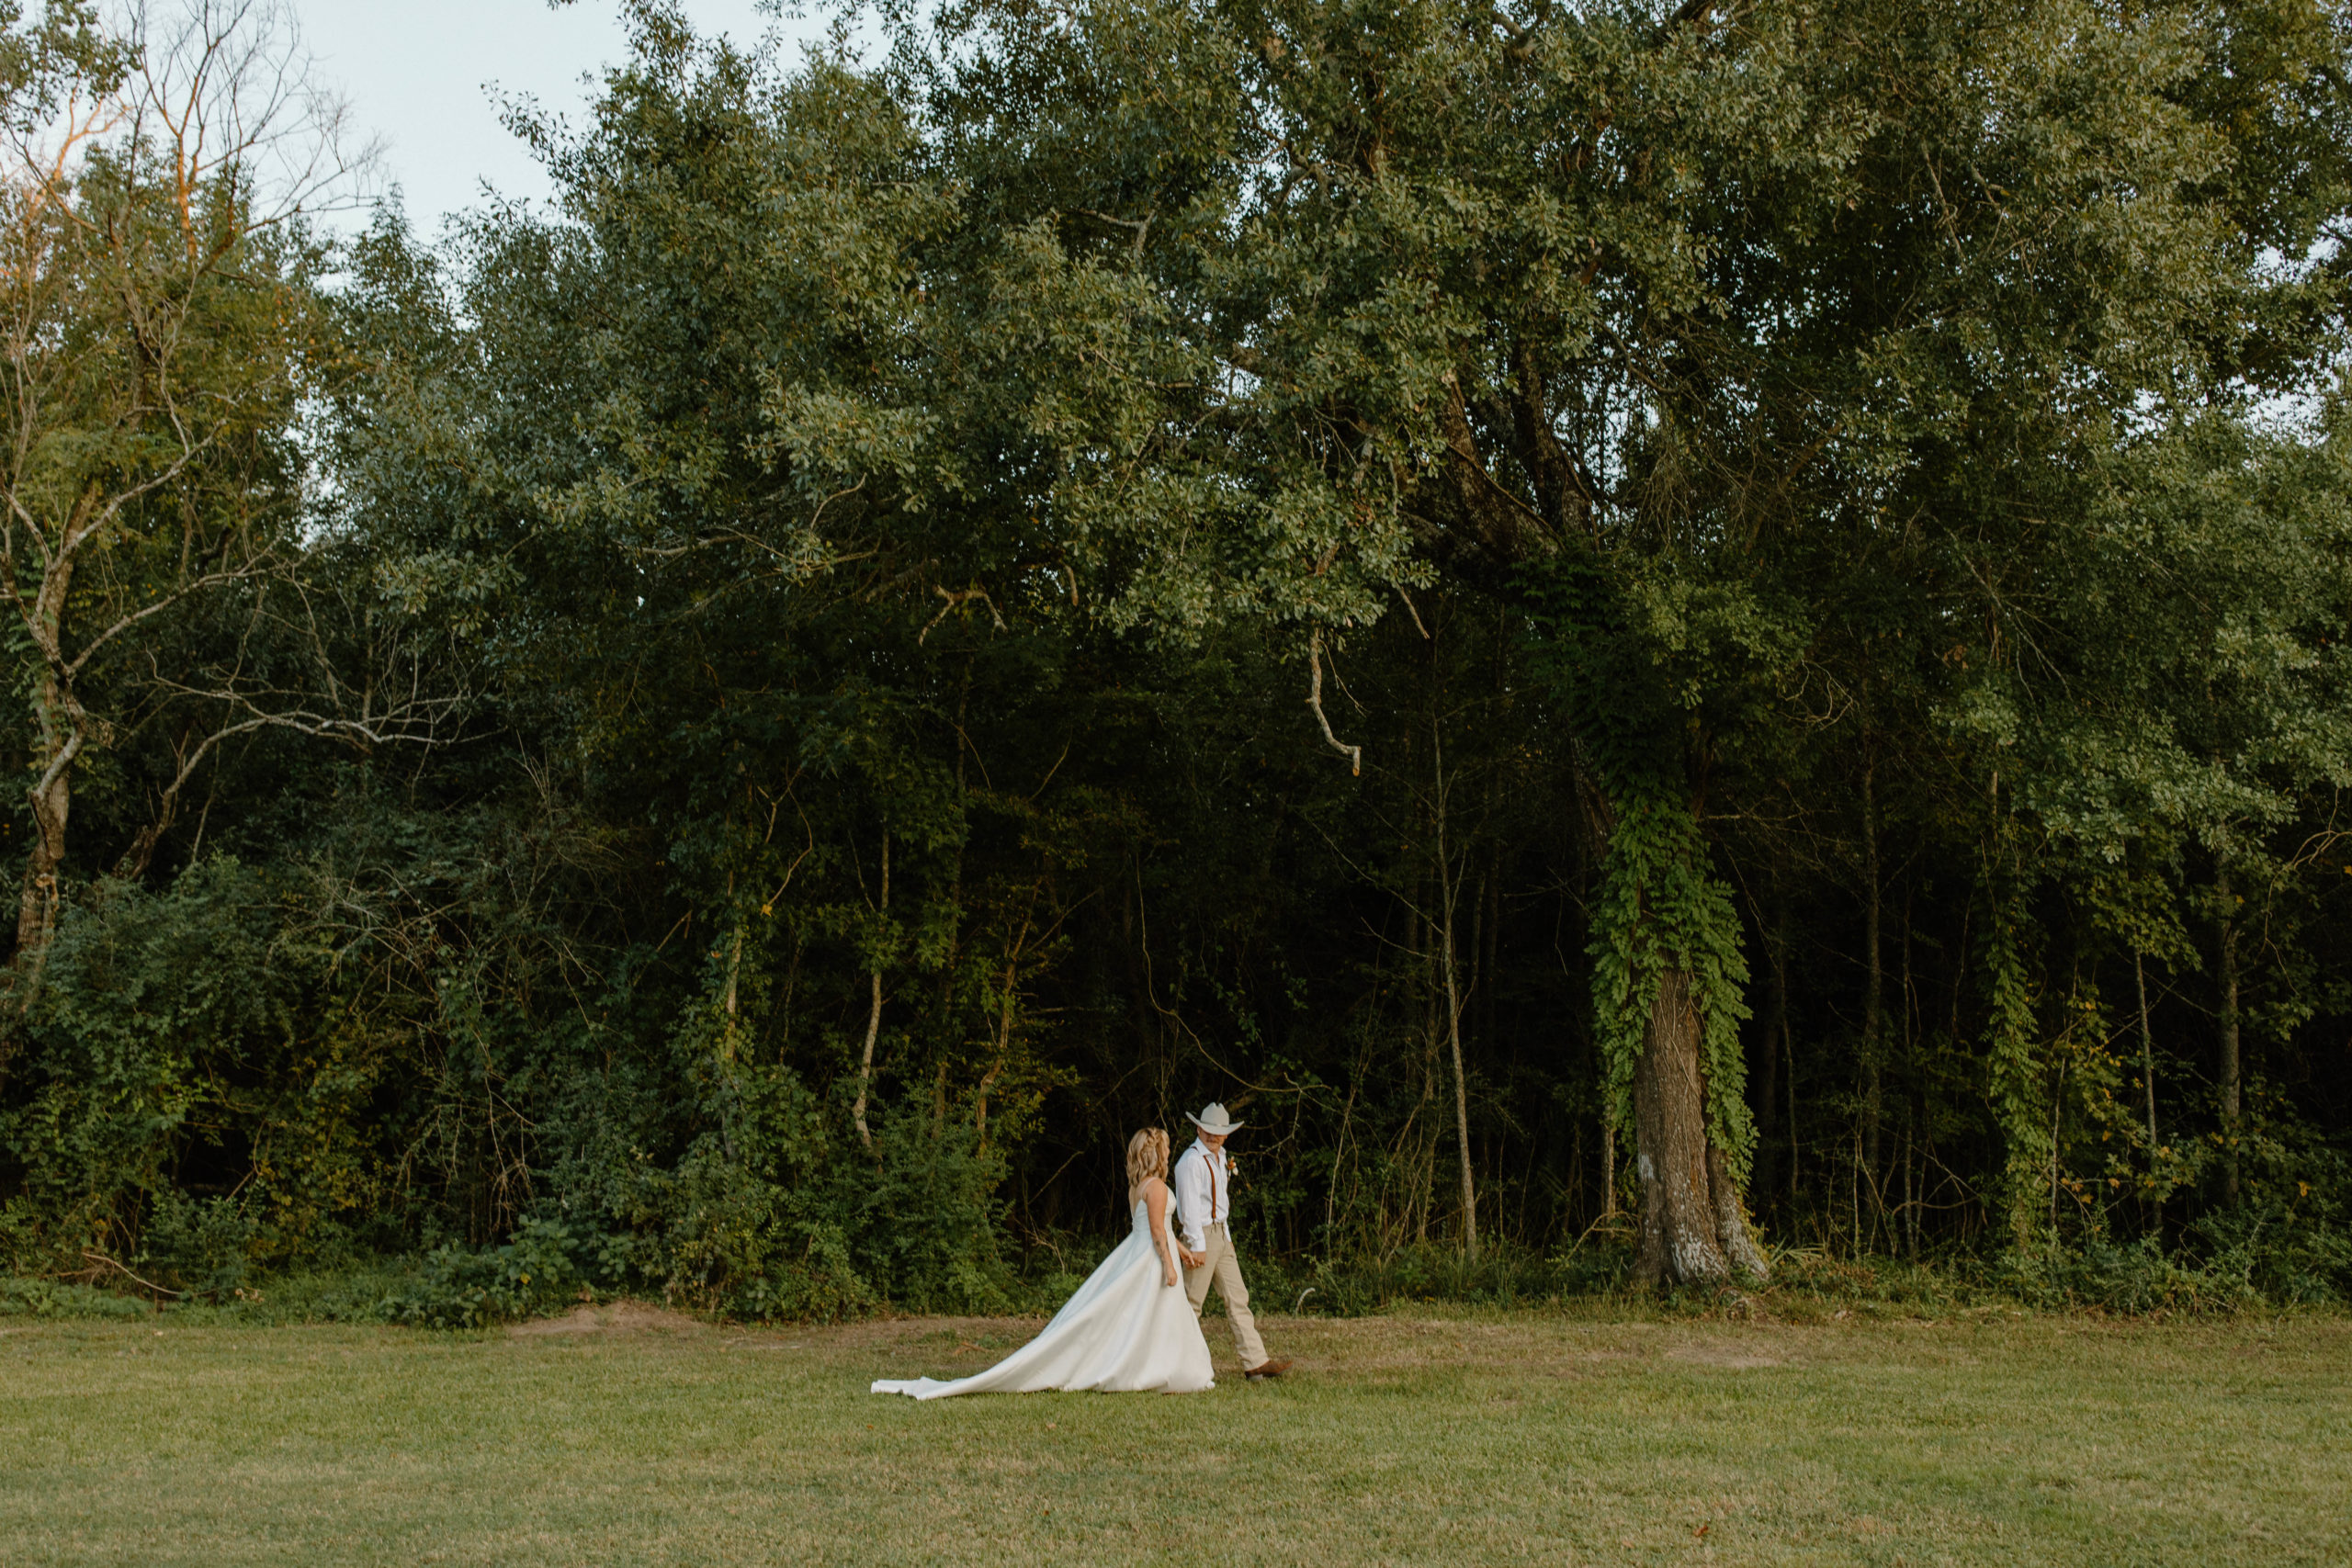 Couple walking through a field - Intimate backyard wedding